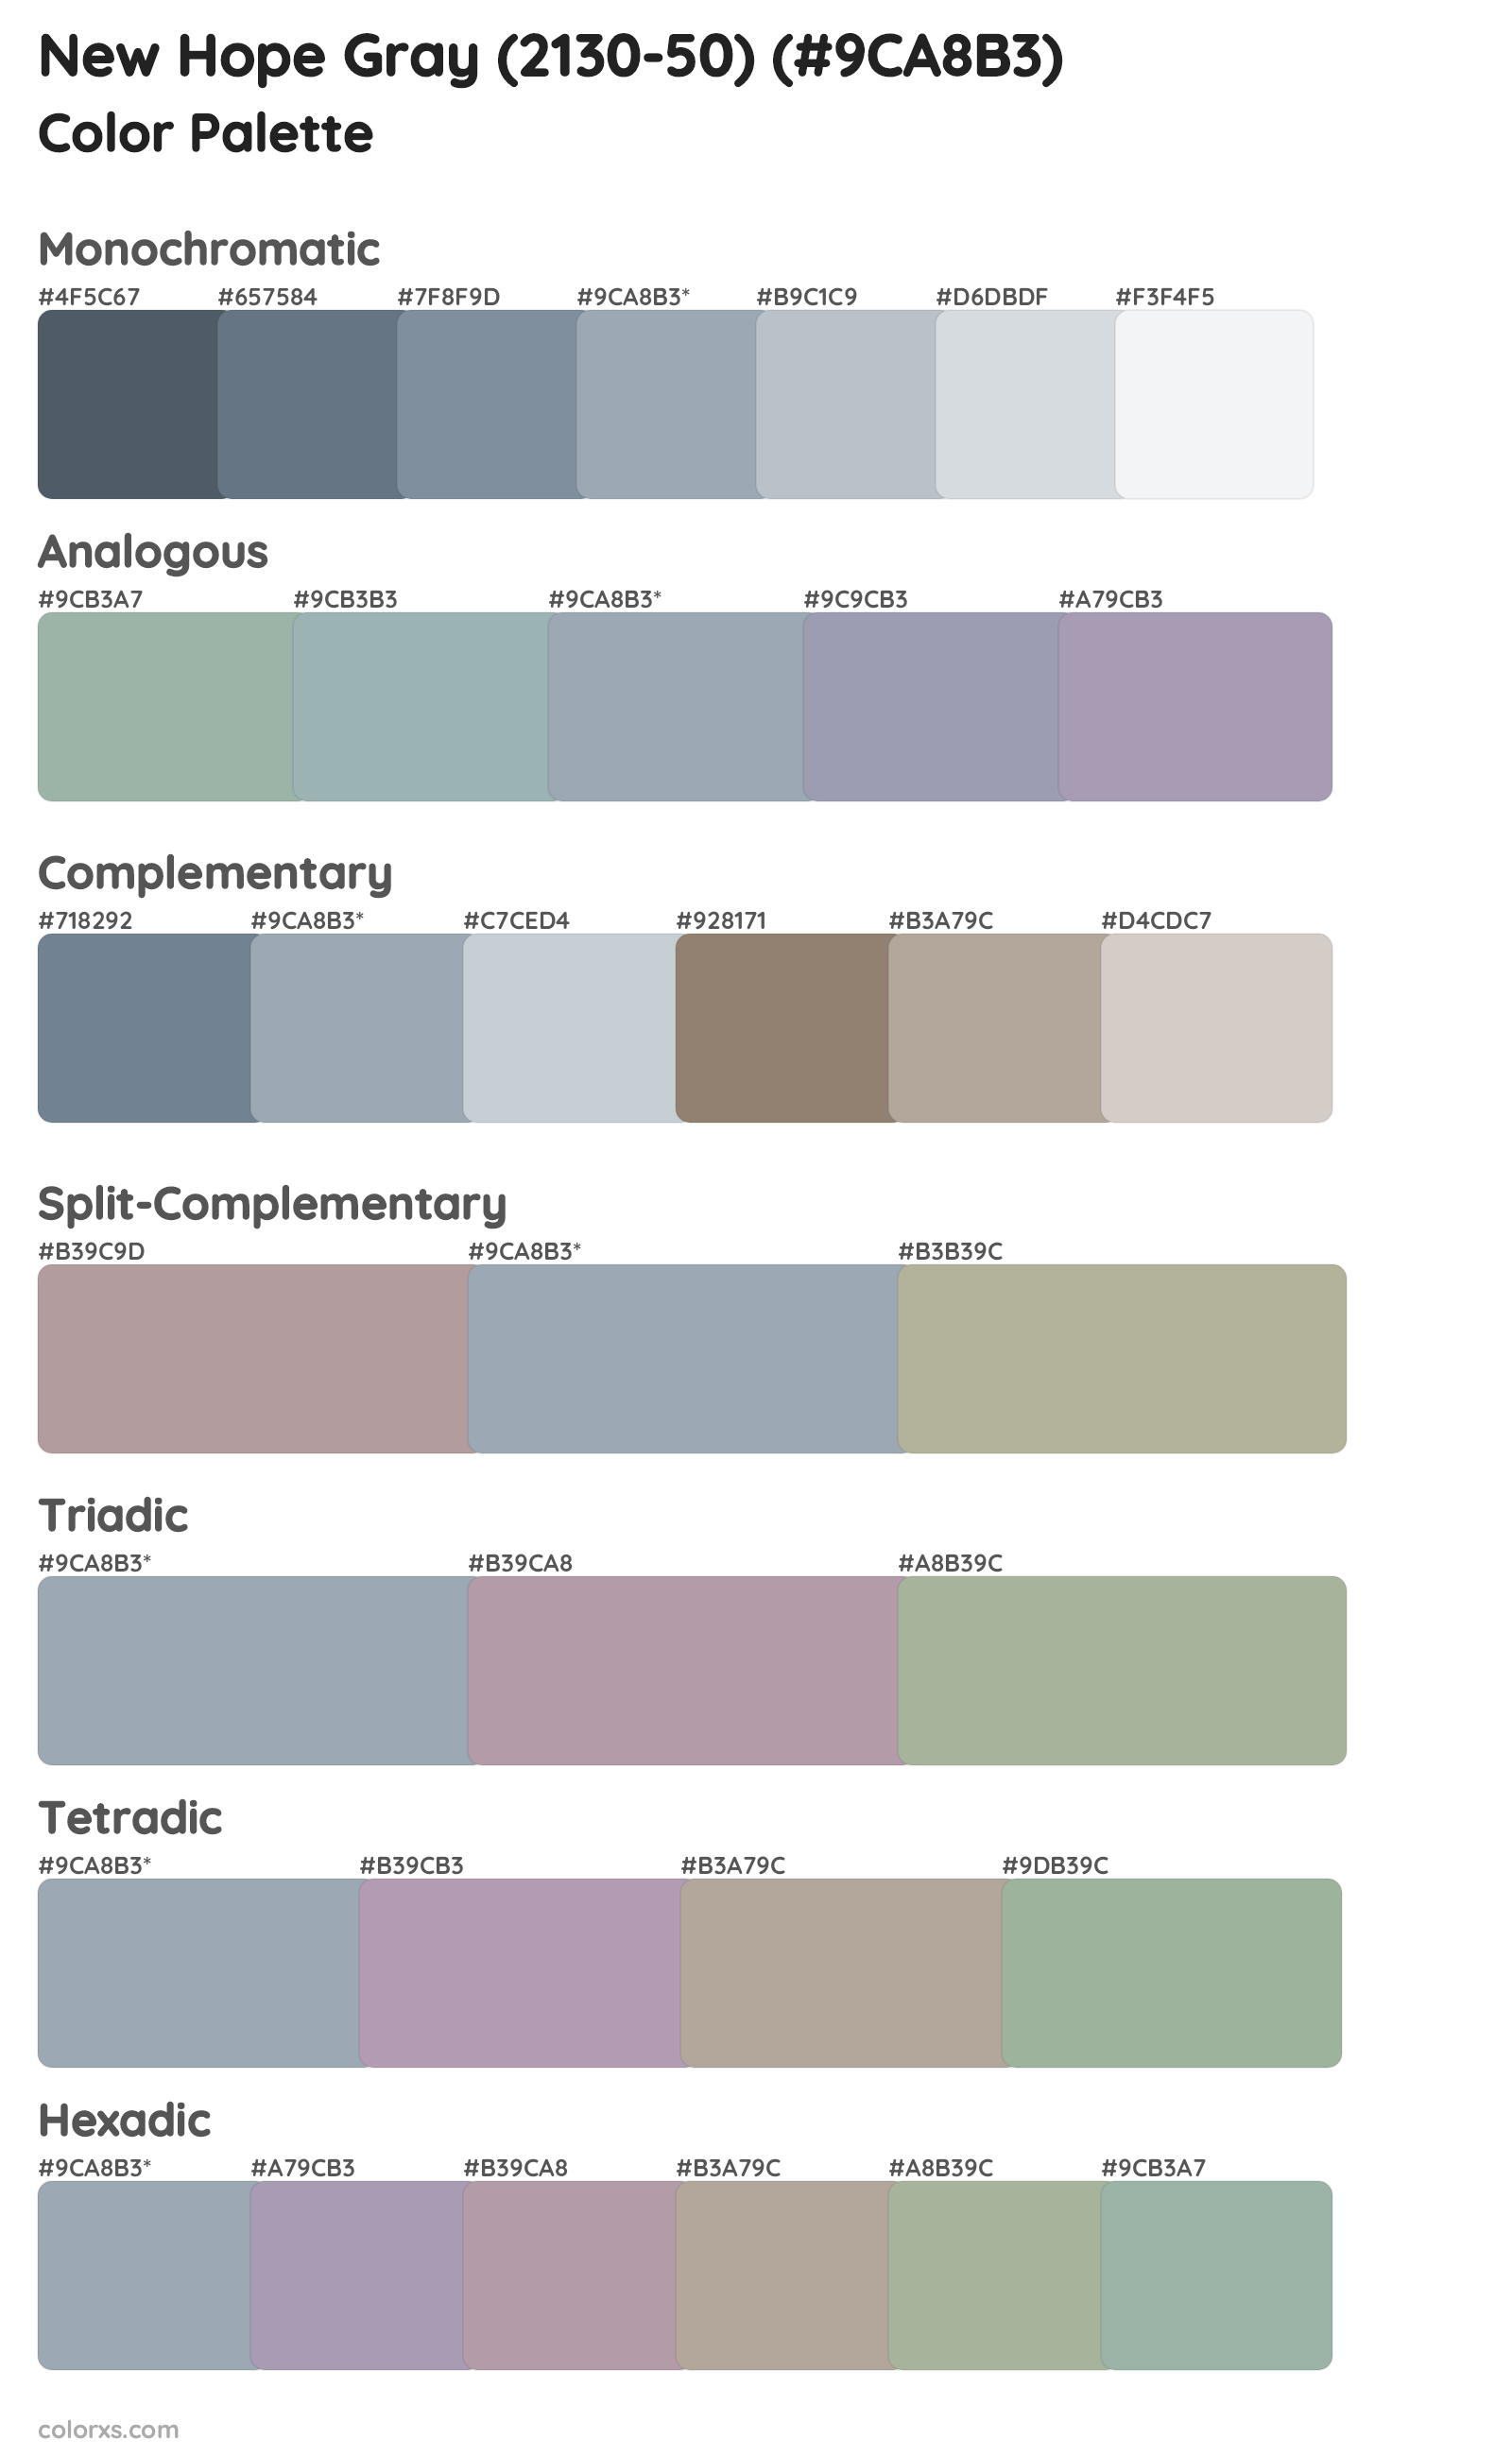 New Hope Gray (2130-50) Color Scheme Palettes